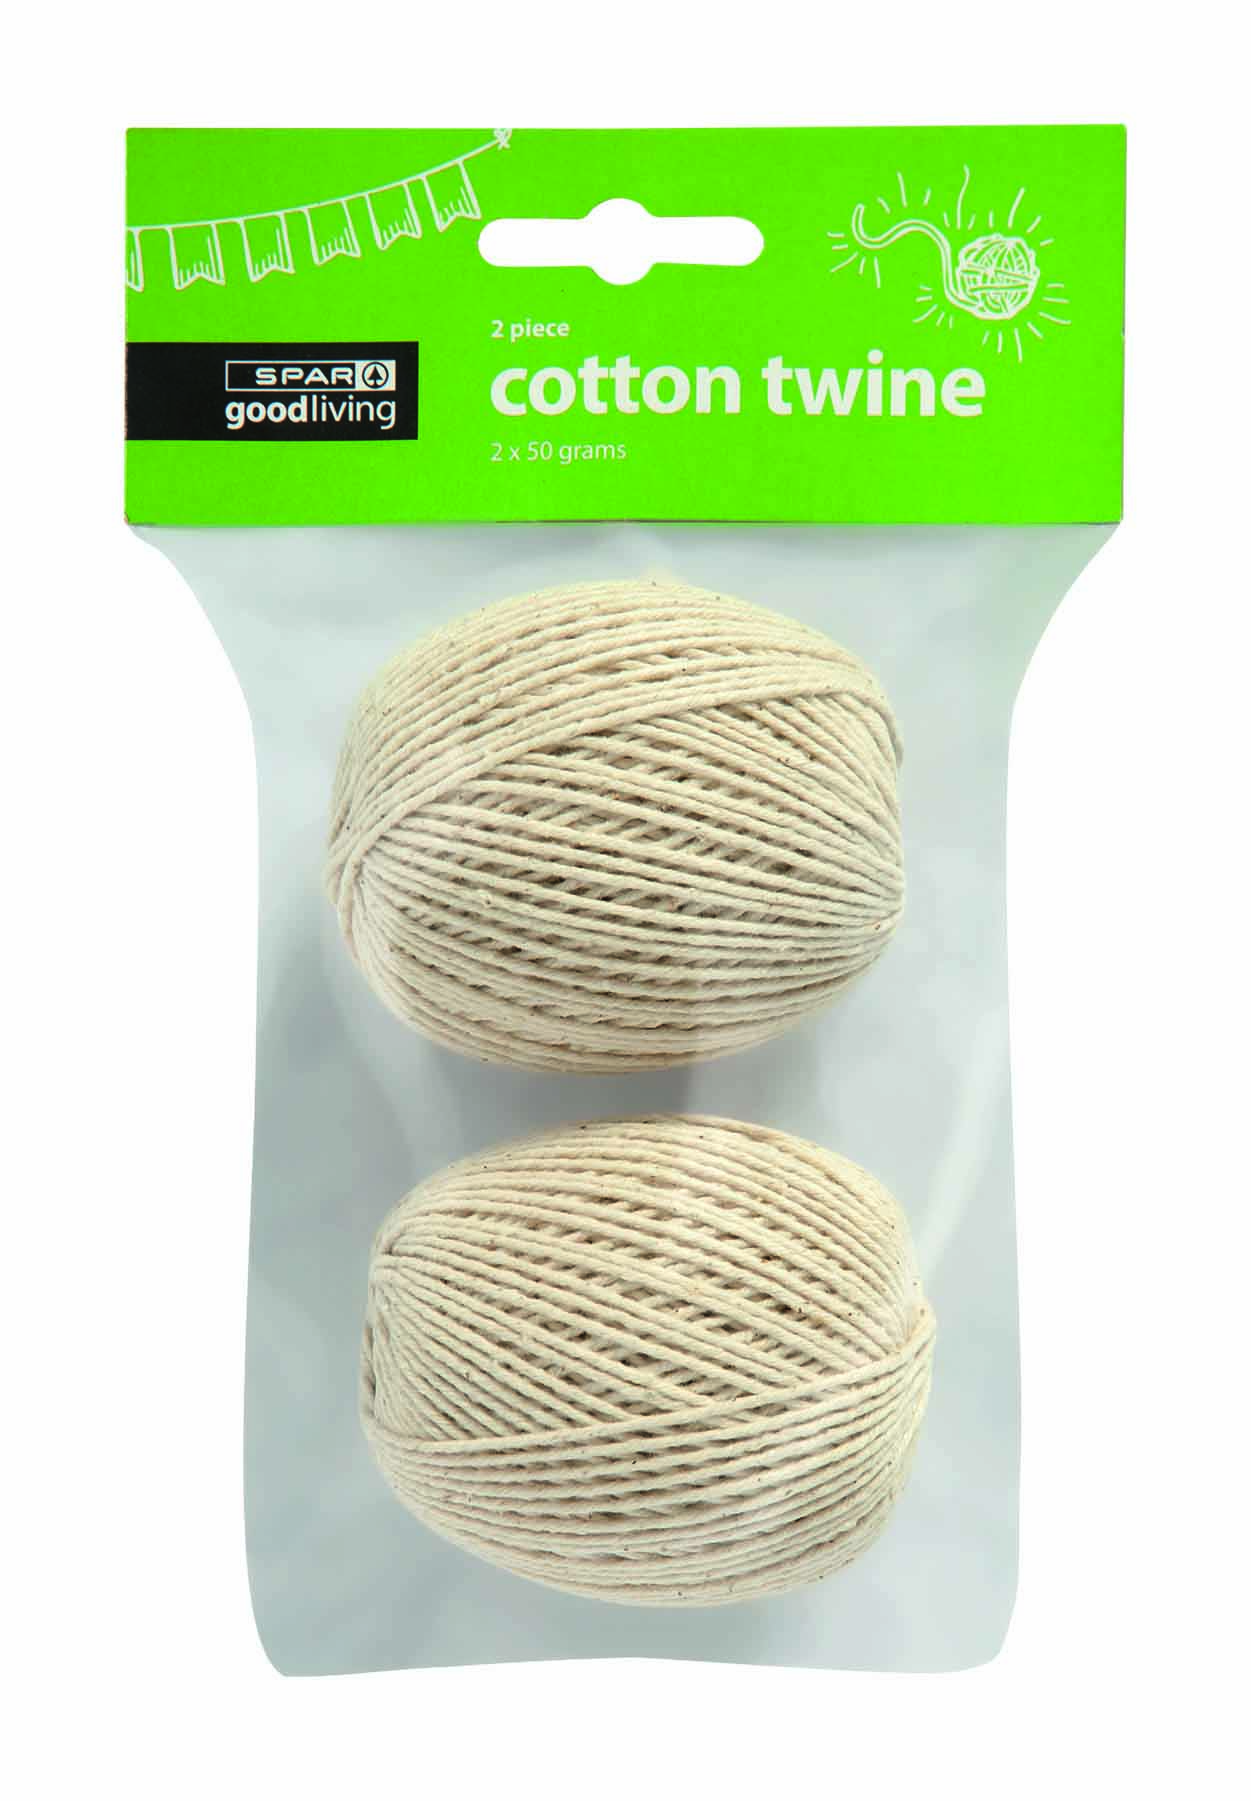 cotton twine (2 x 50g) - 2 piece